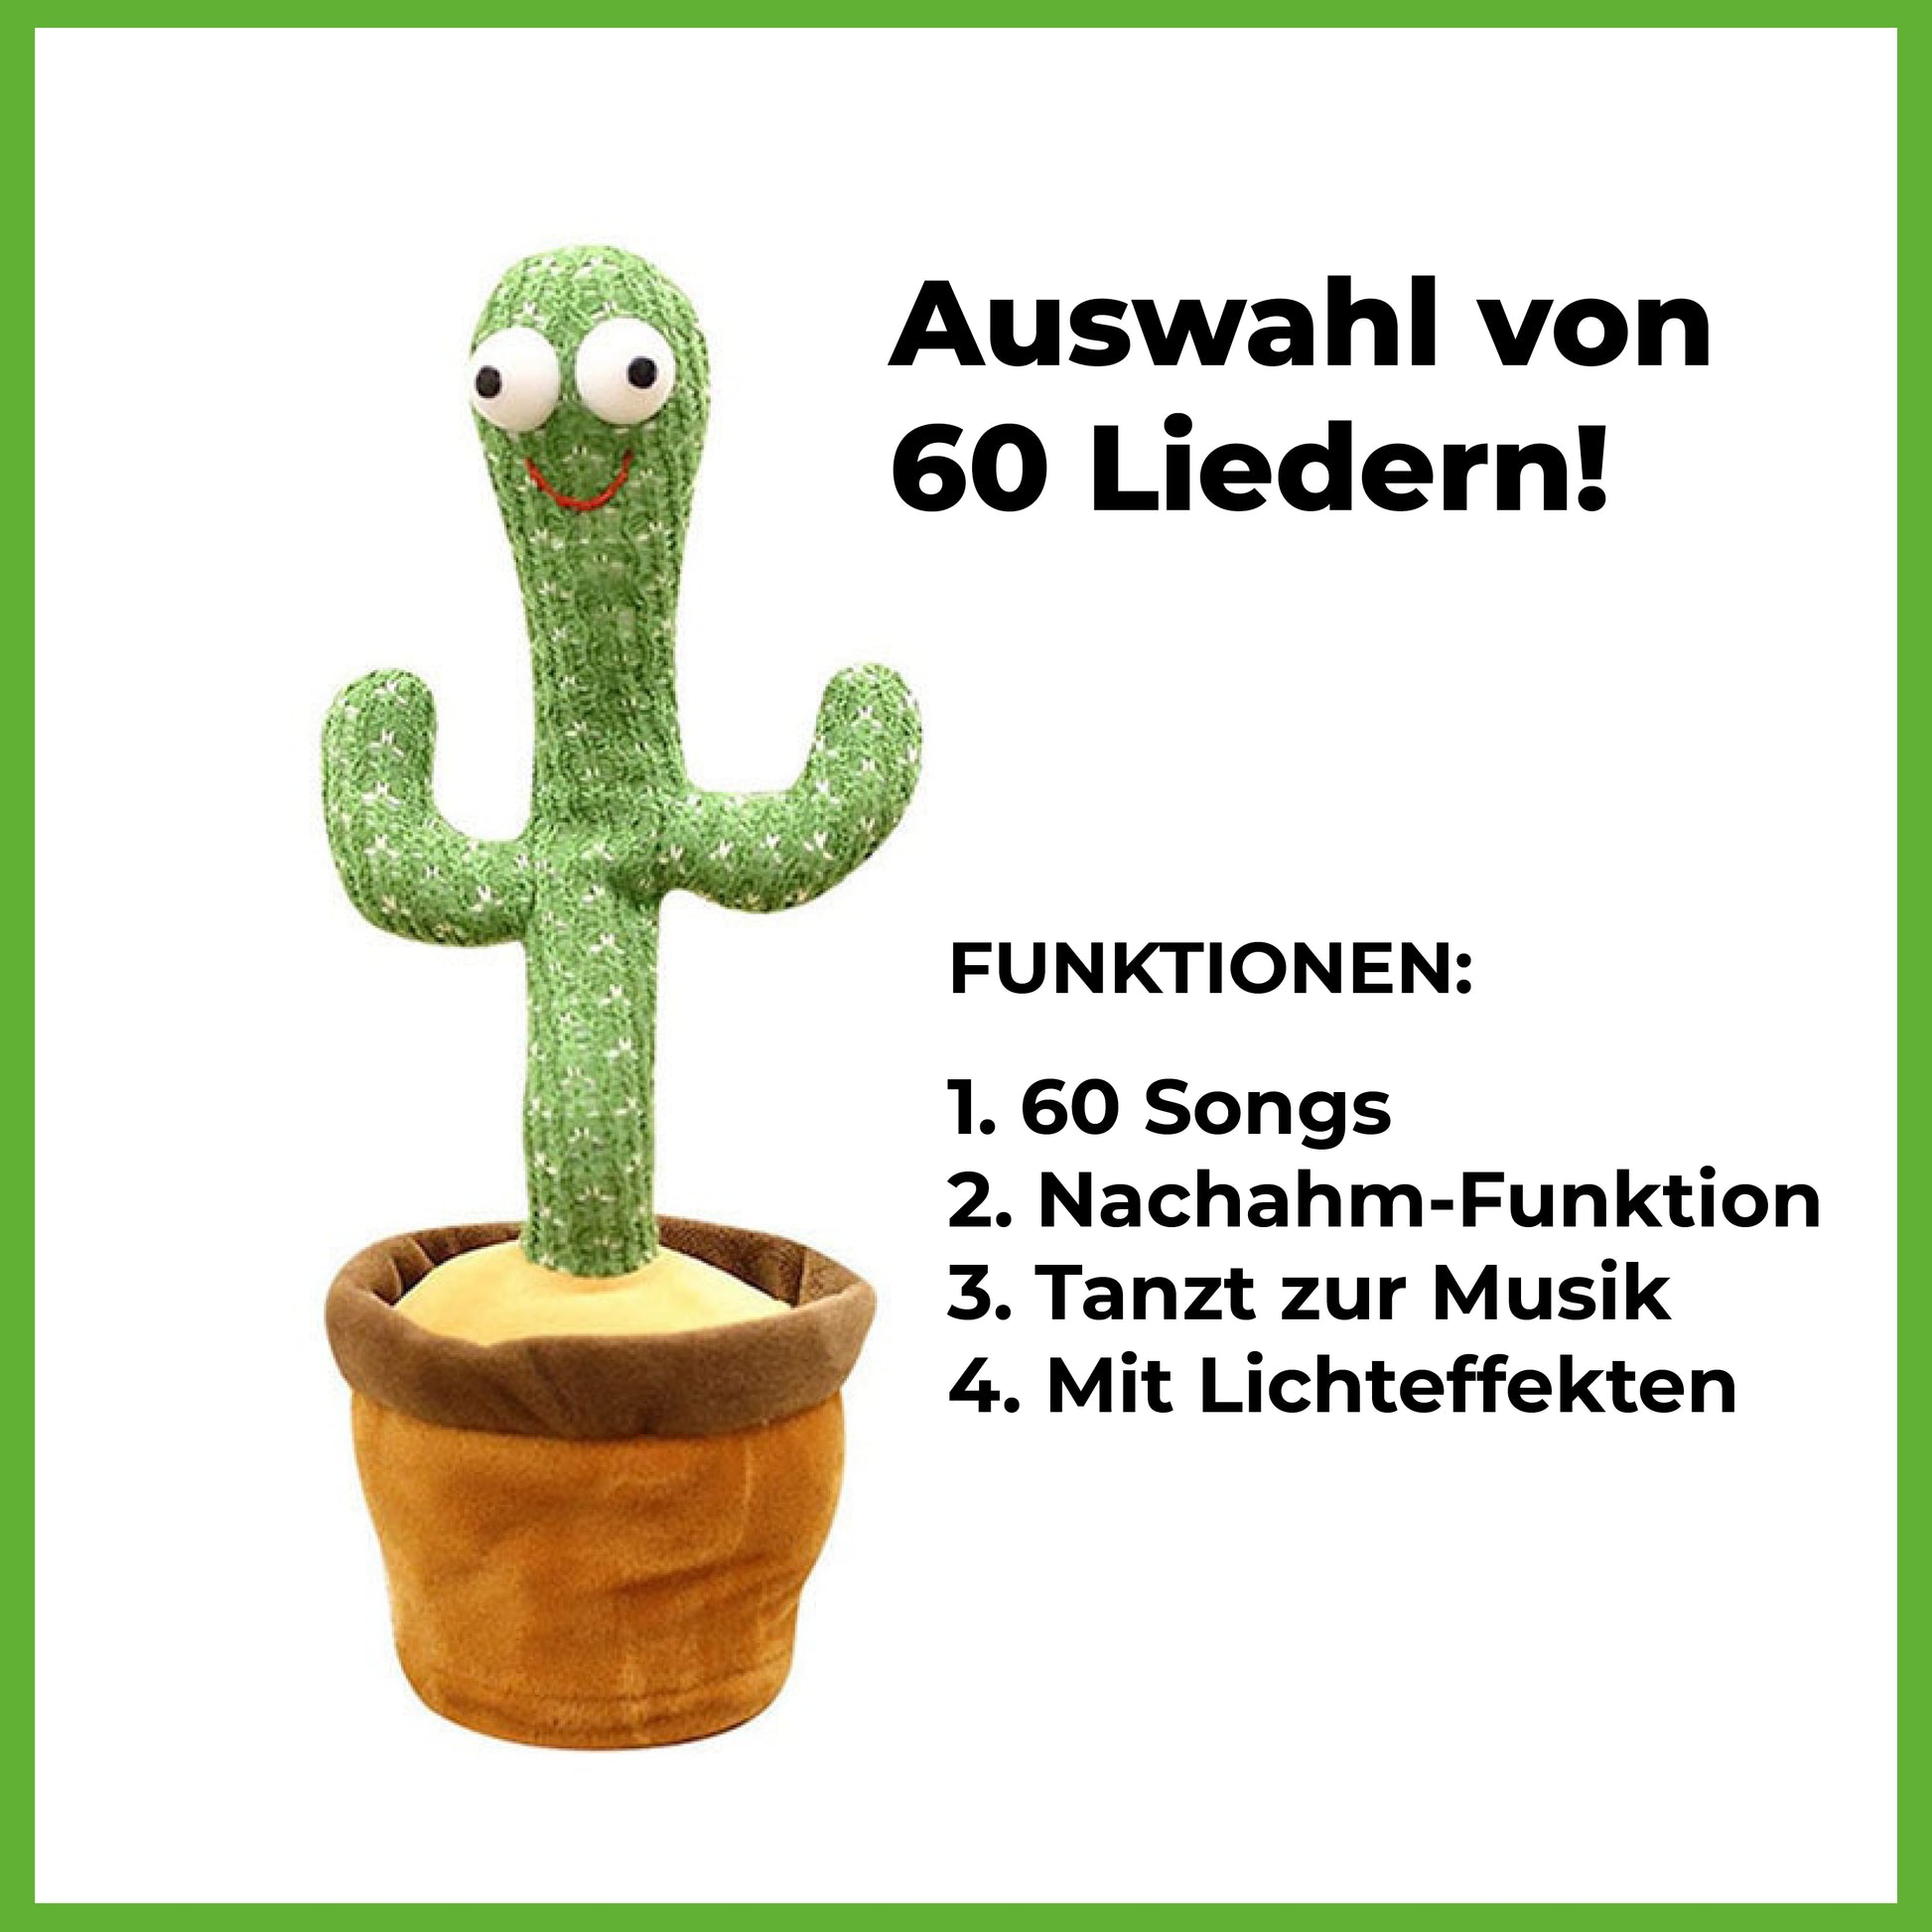 Rüdiger Gerhardt - Singender & Tanzender Kaktus, sortiert